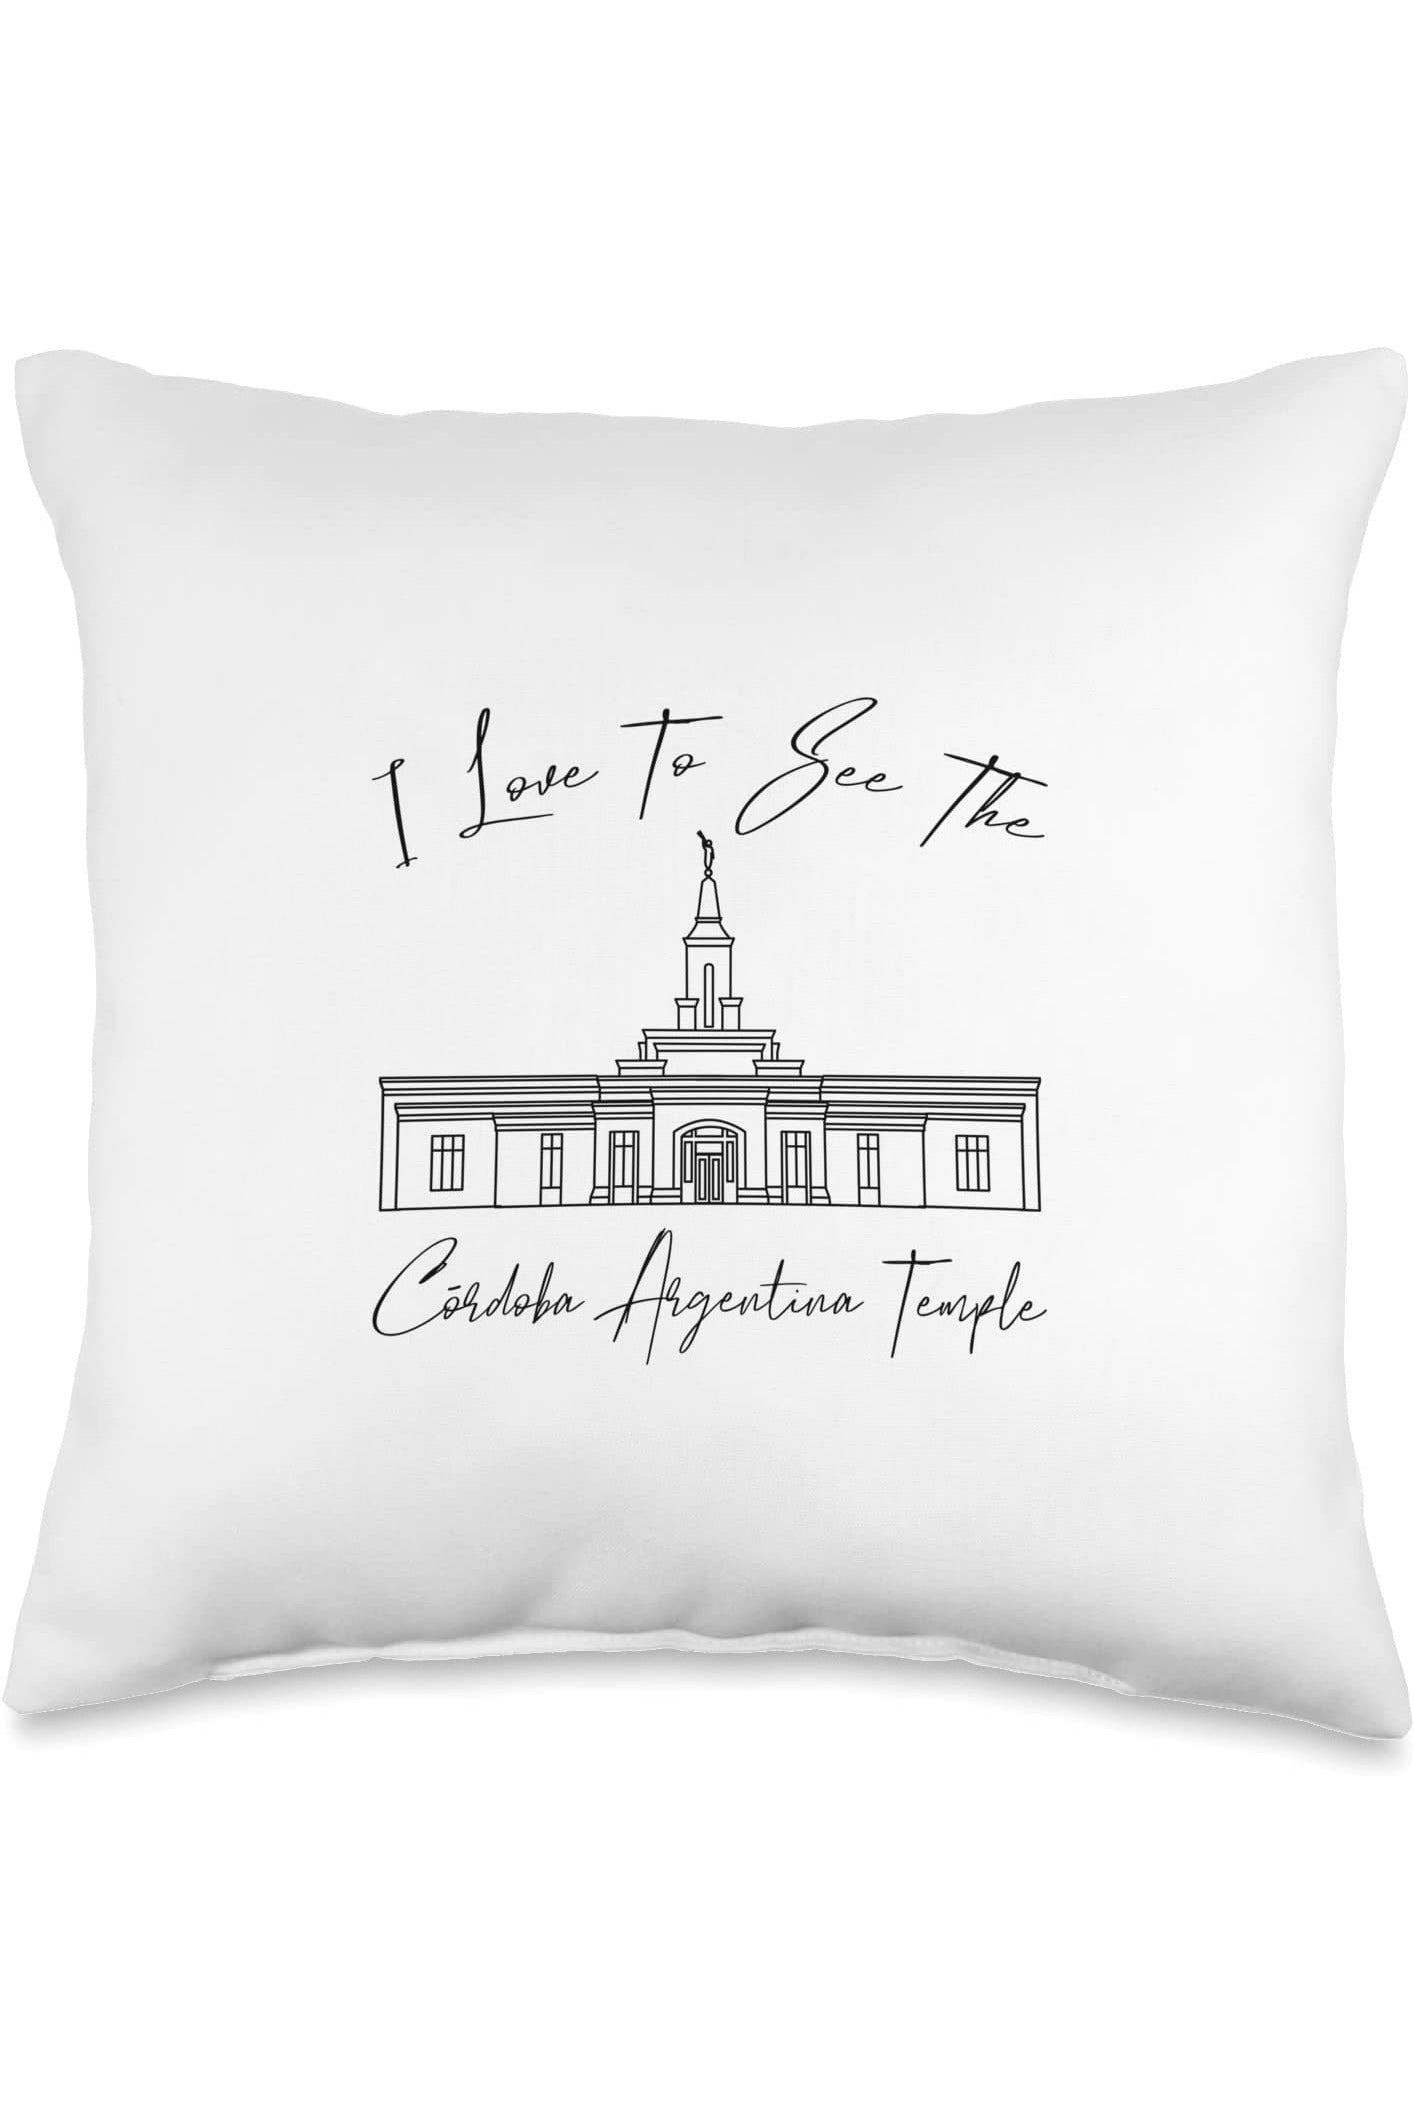 Cordoba Argentina Temple Throw Pillows - Calligraphy Style (English) US